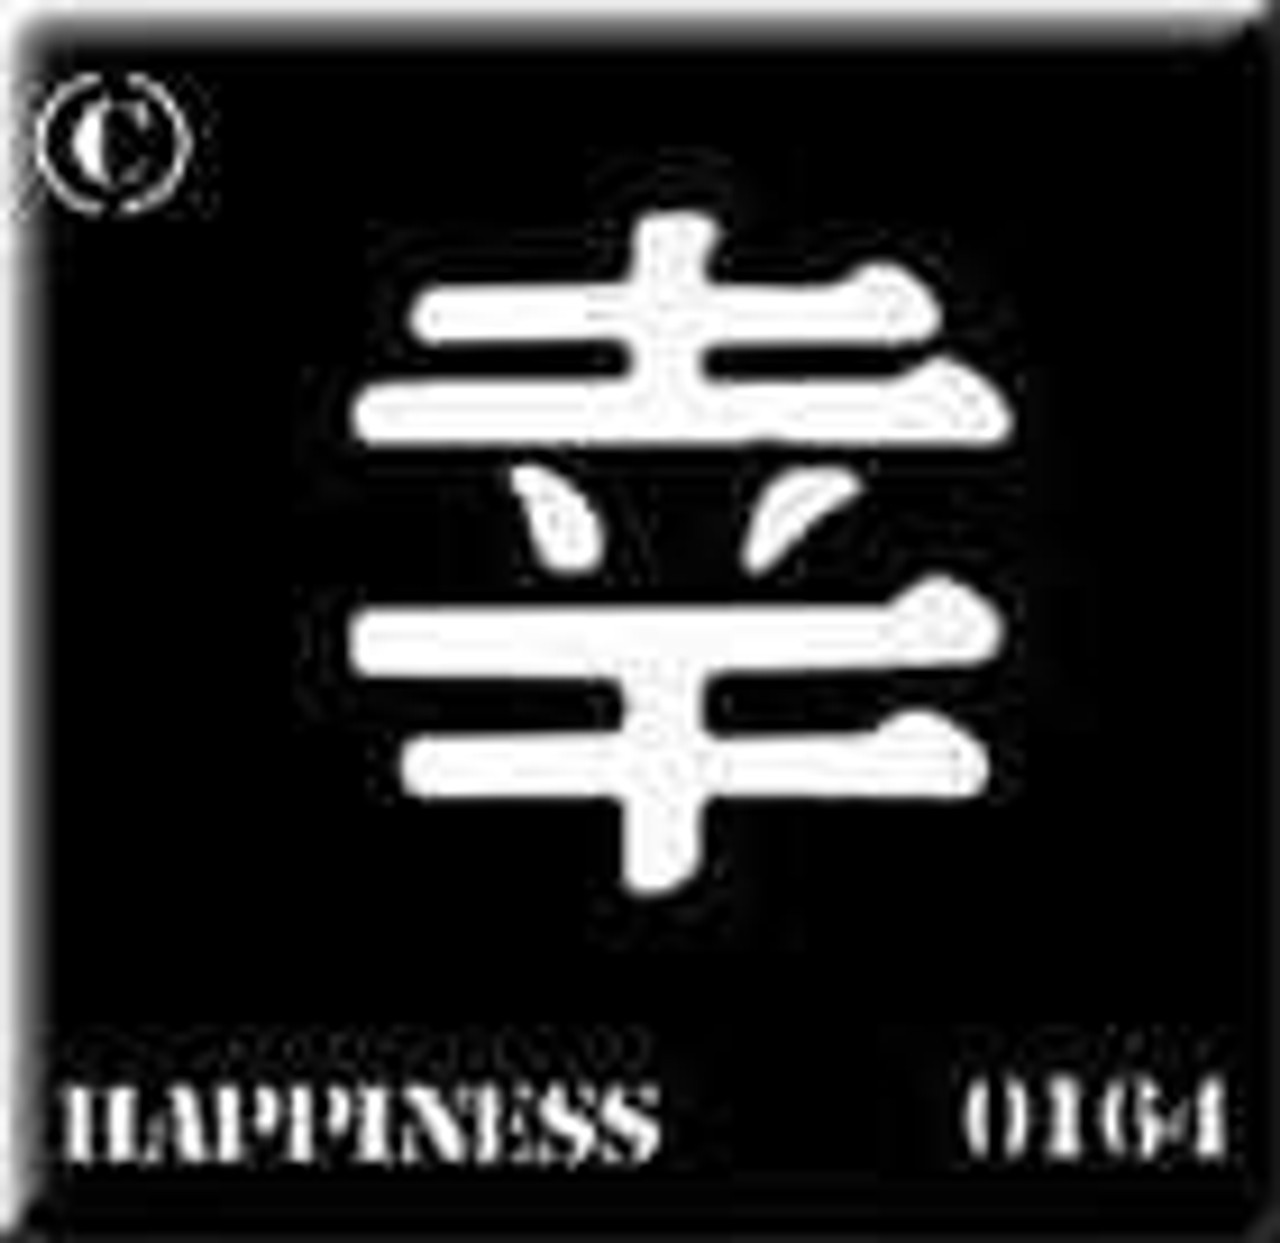 0164 Happiness